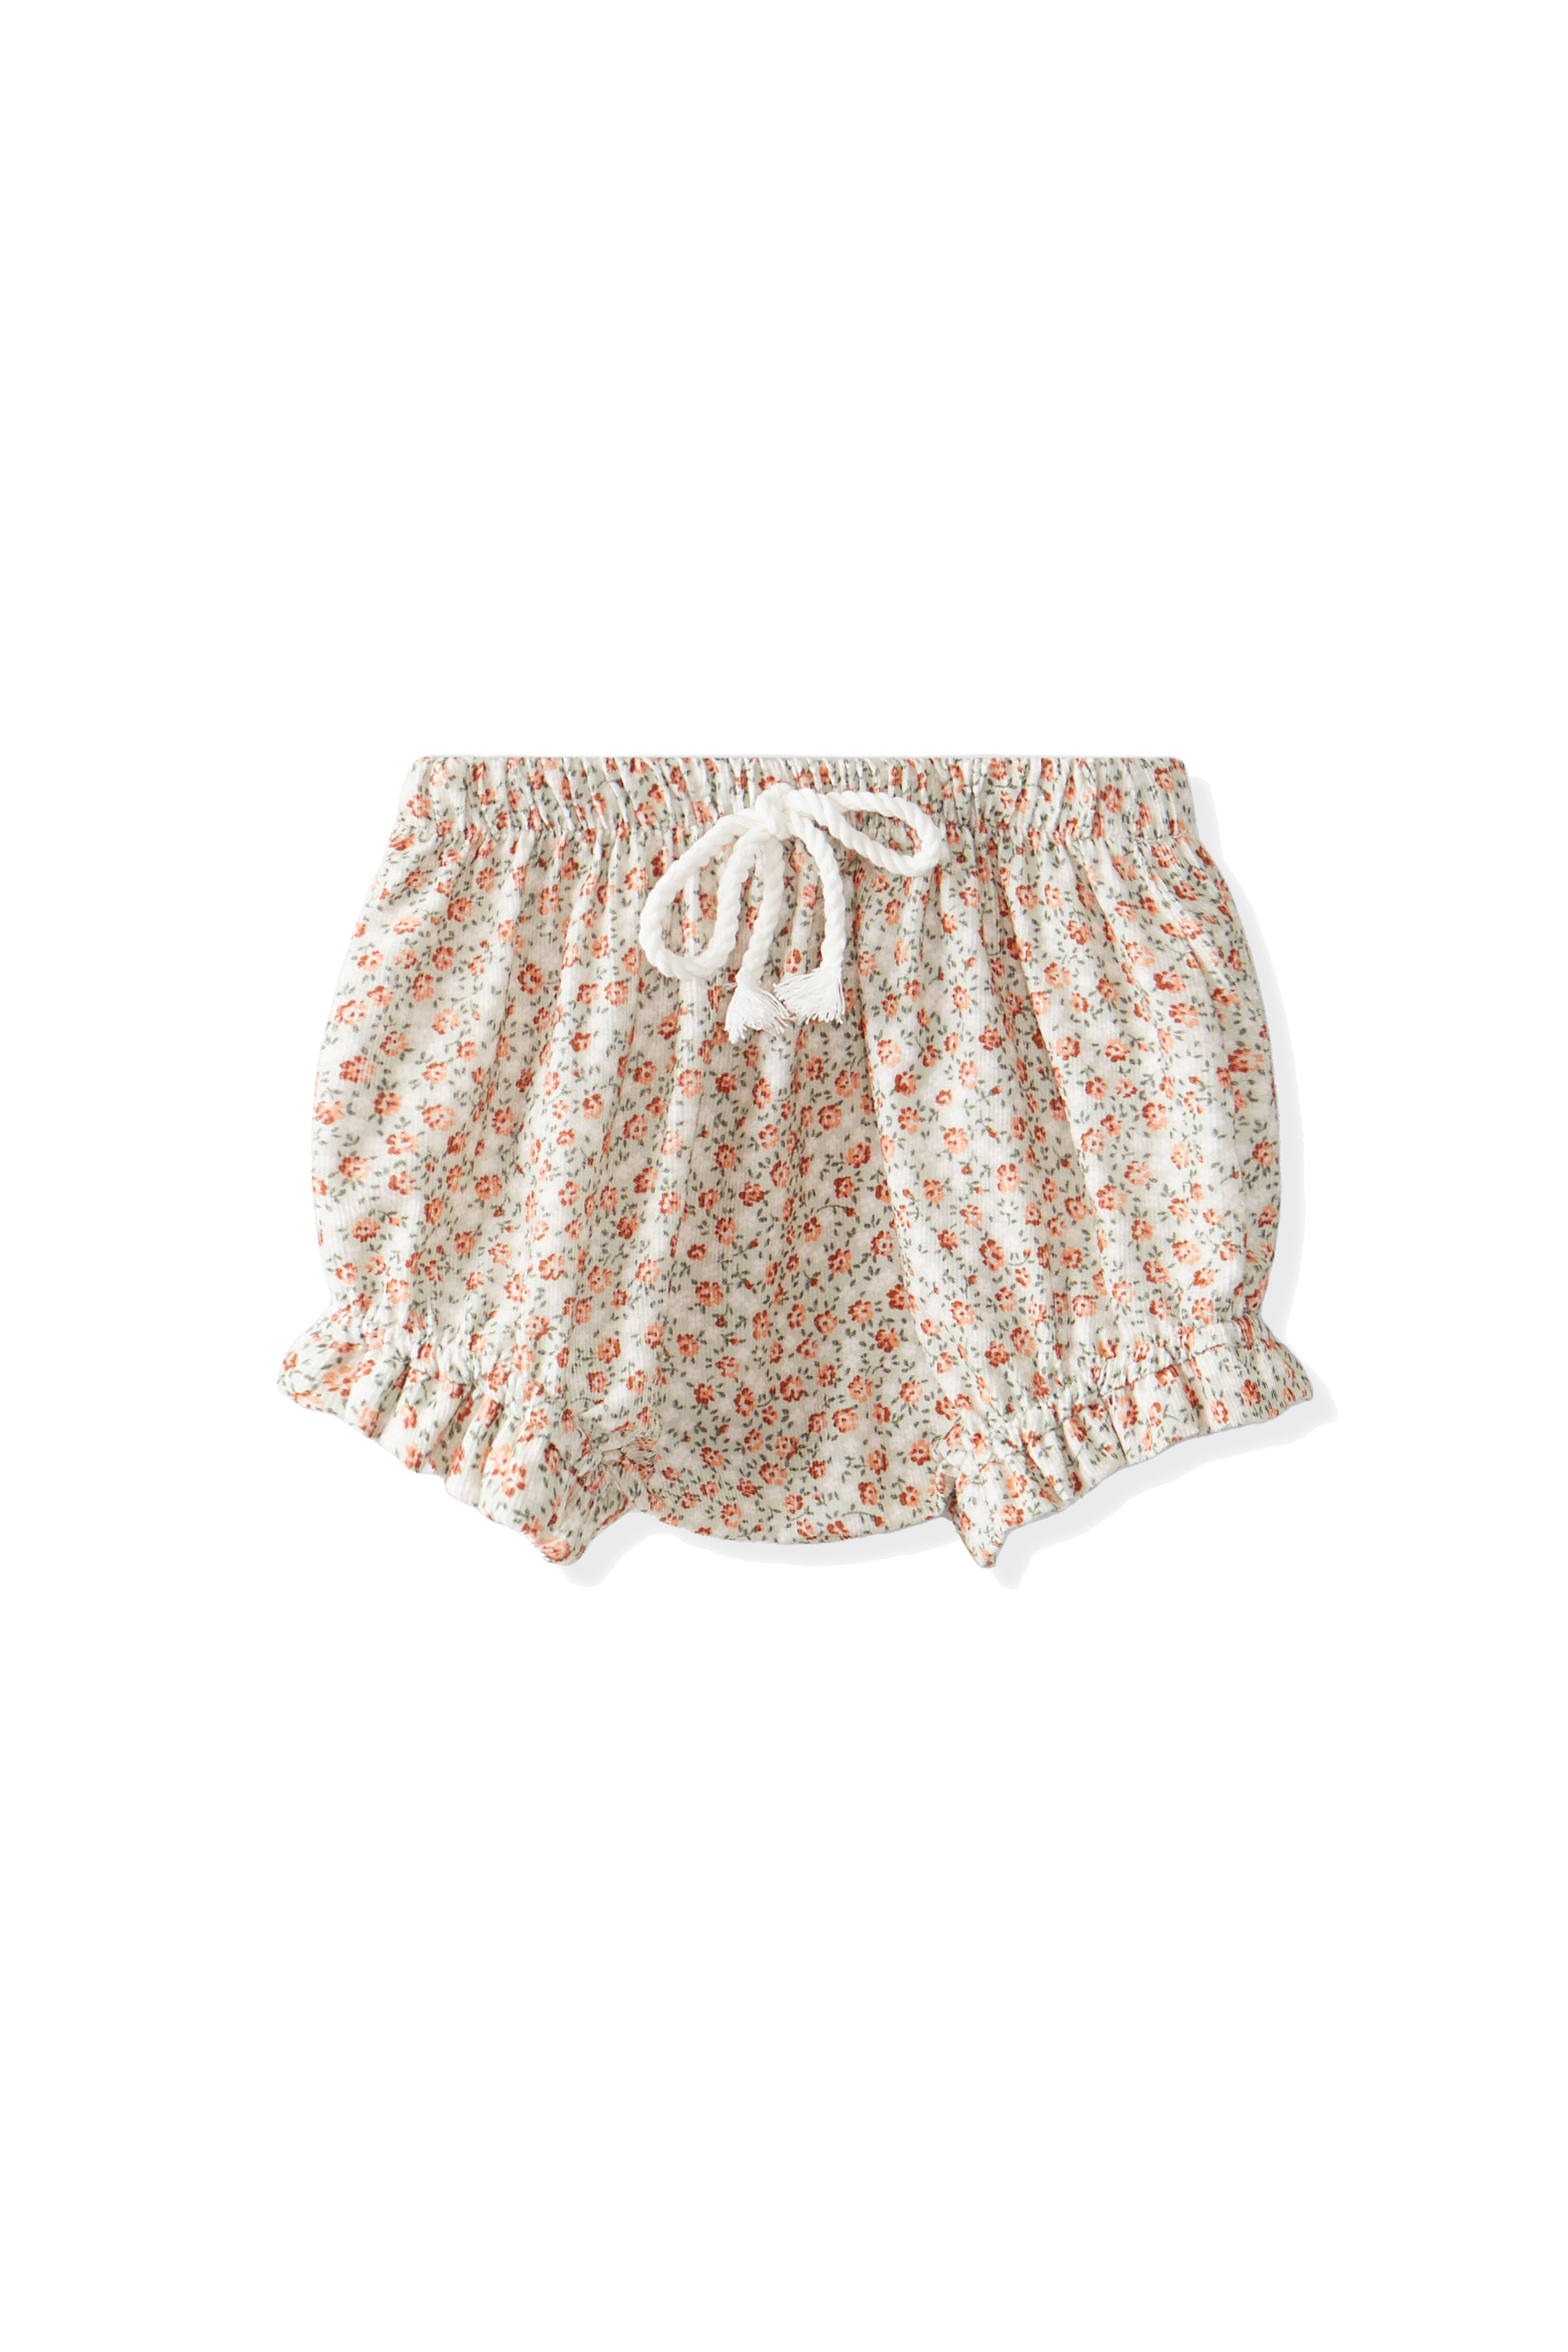 Laranjinha shorts in flower print